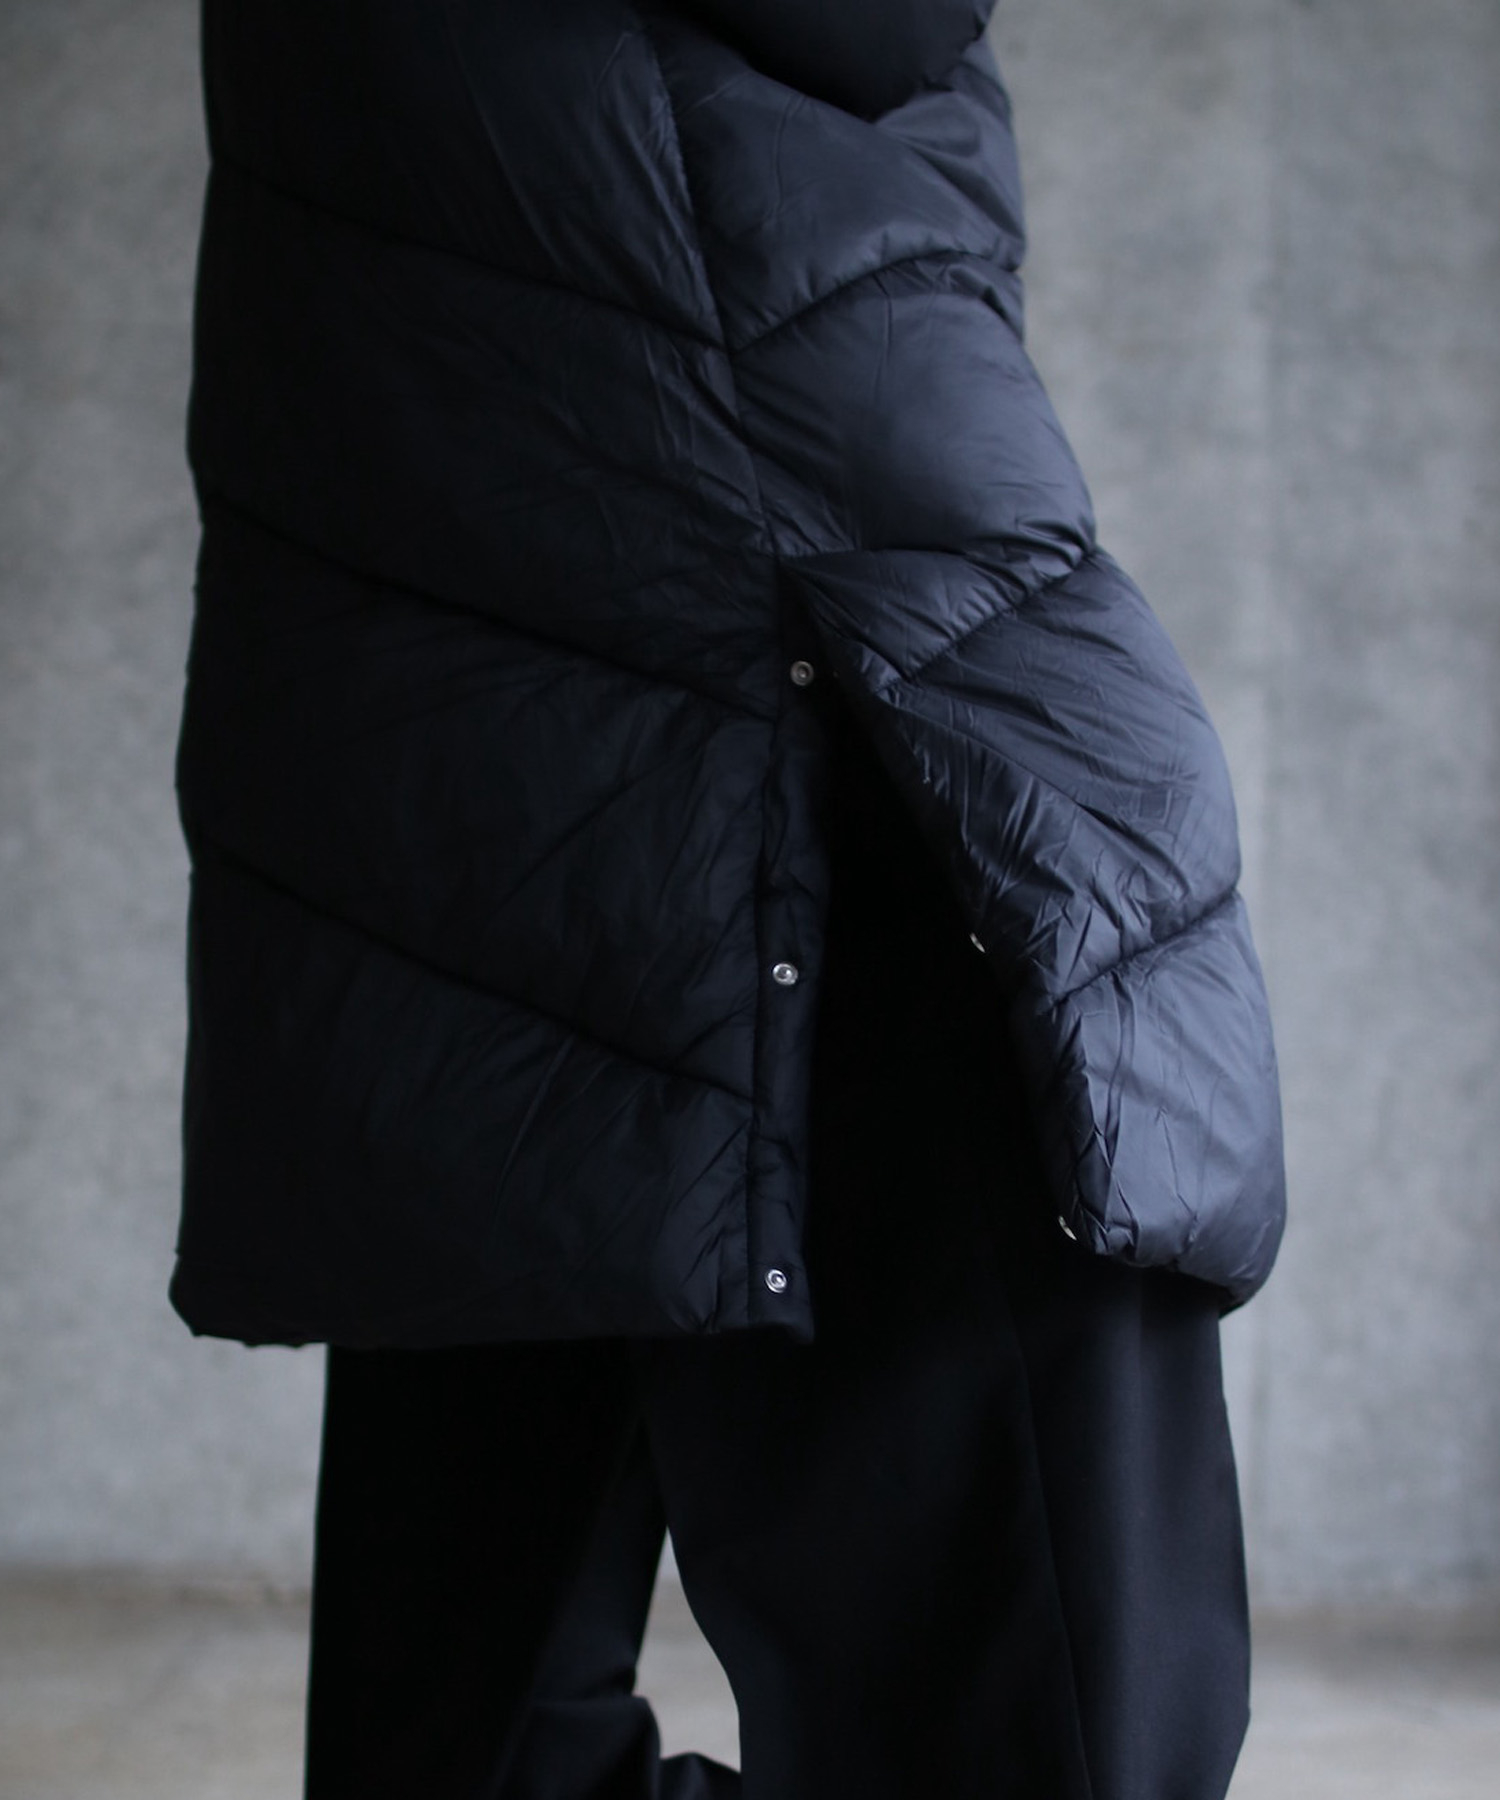 Hooded puffer coat